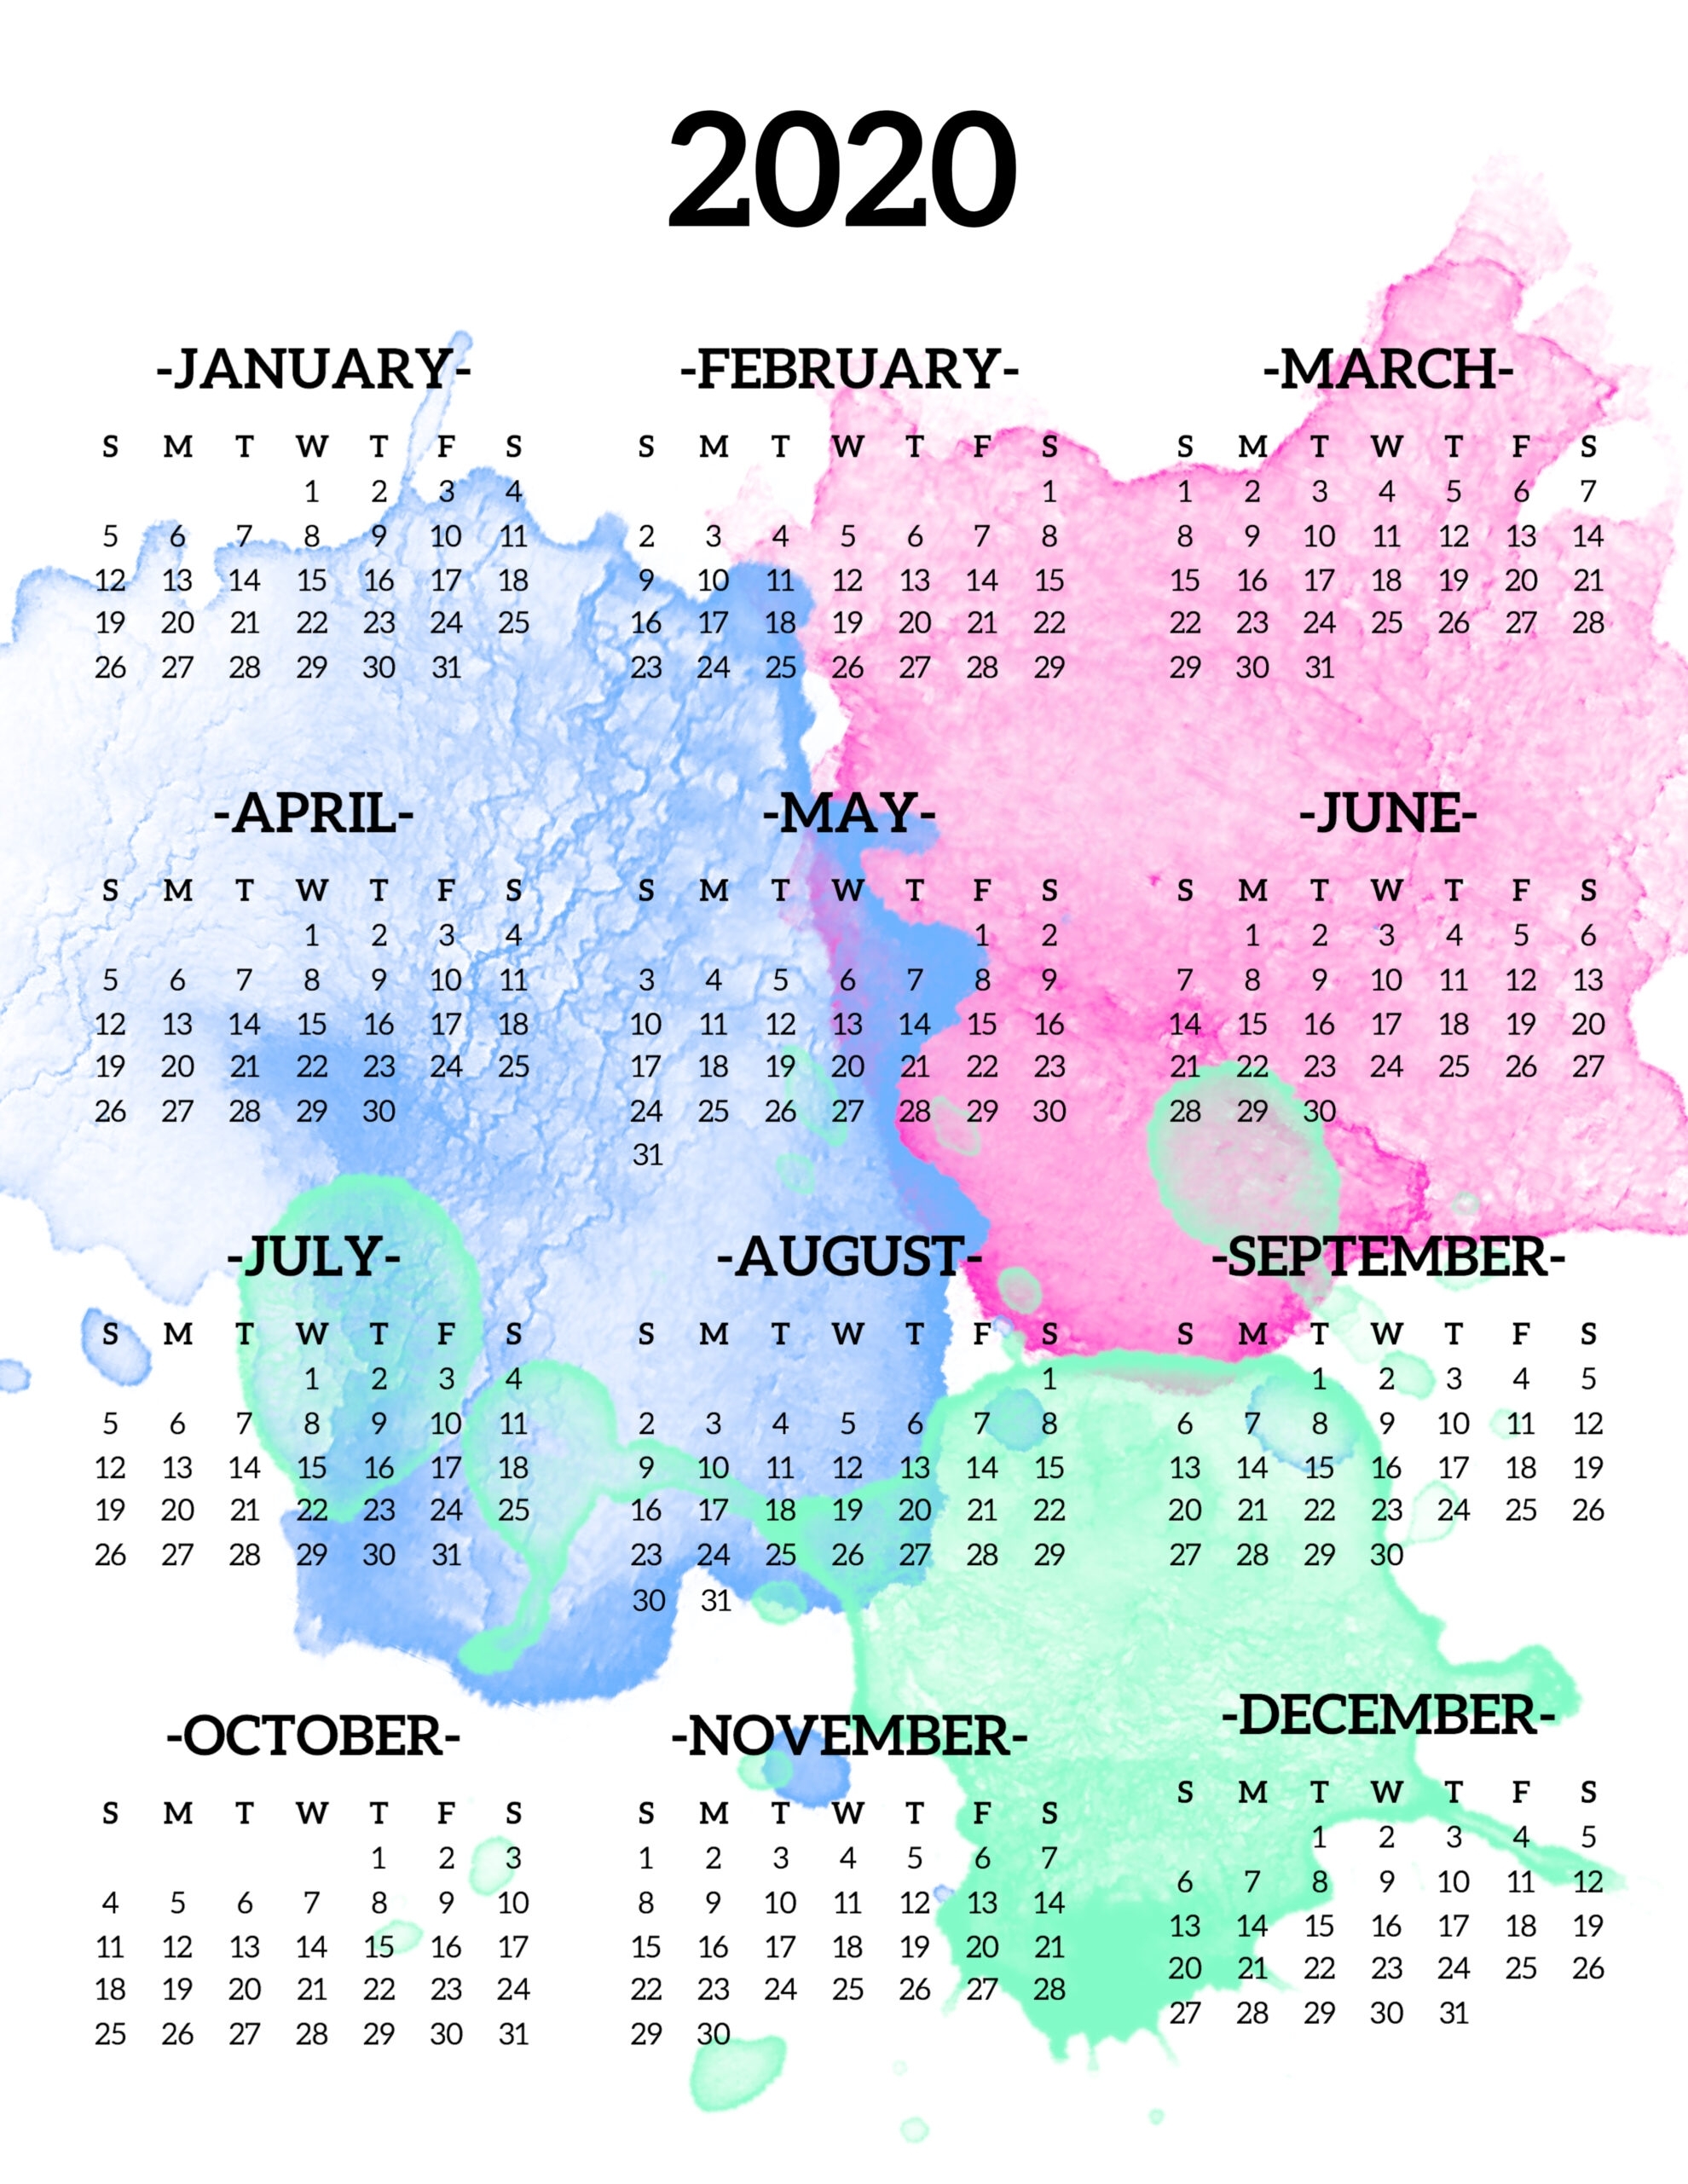 Calendar 2020 Printable One Page - Paper Trail Design inside 2020 At A Glance Calendar Printable